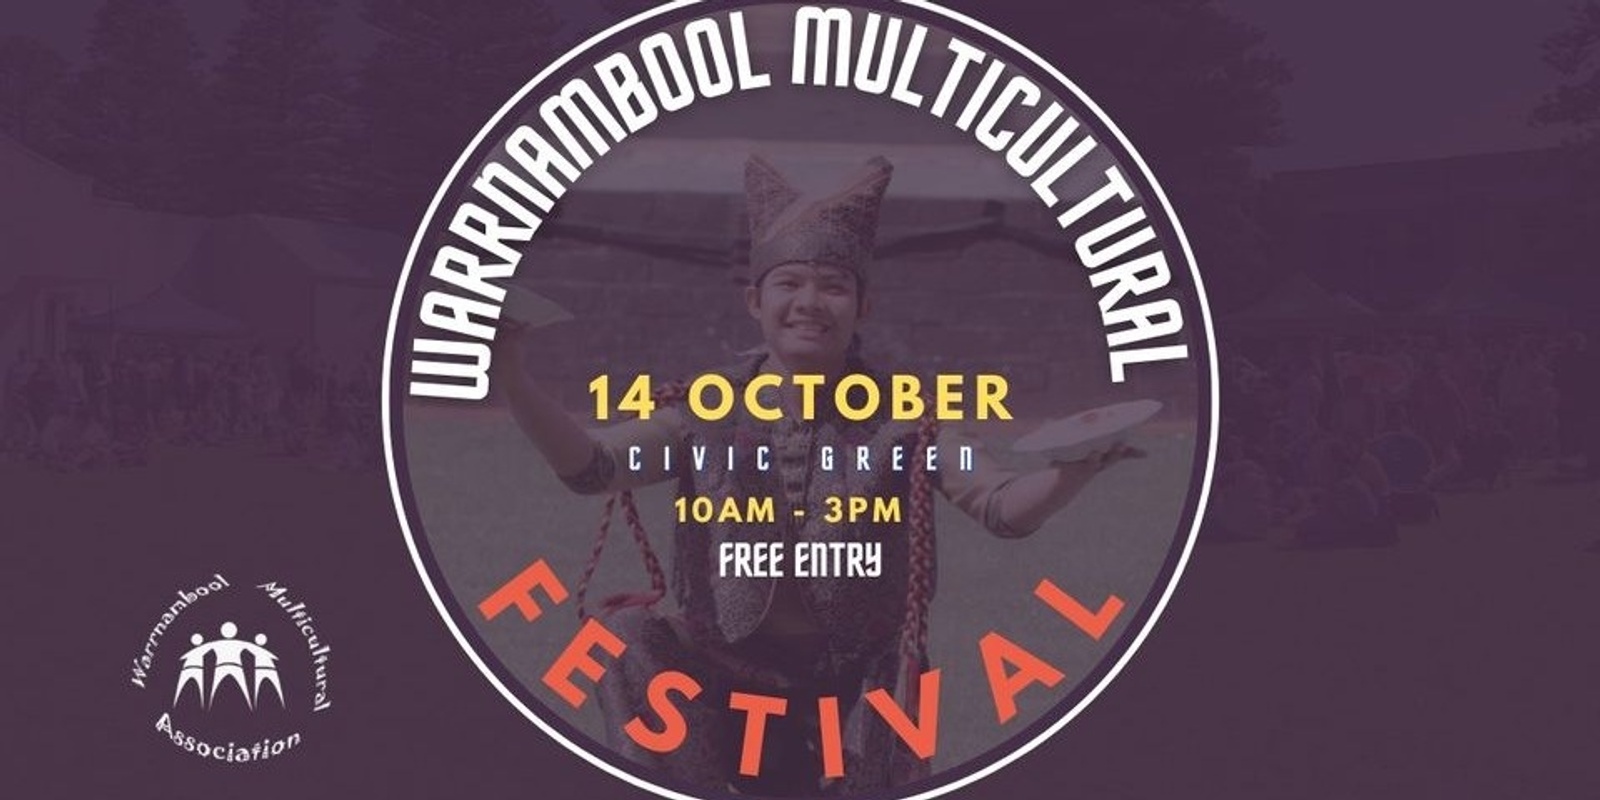 Banner image for Warrnambool Multicultural Festival